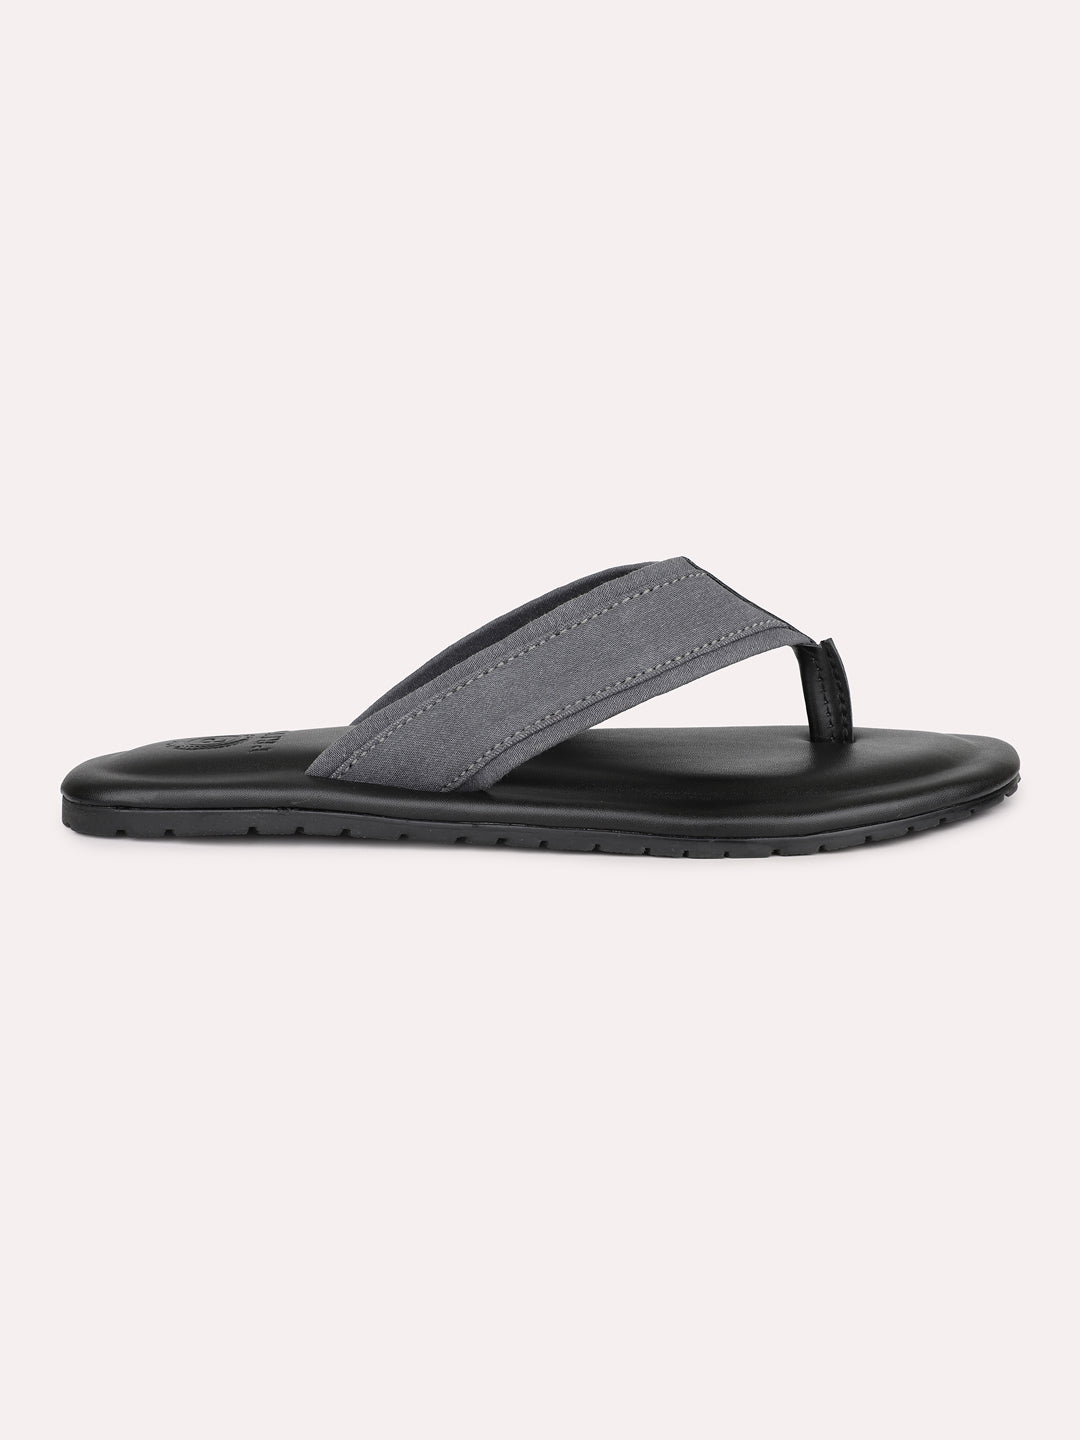 Privo Denim Grey T-strap Casual Sandals For Men